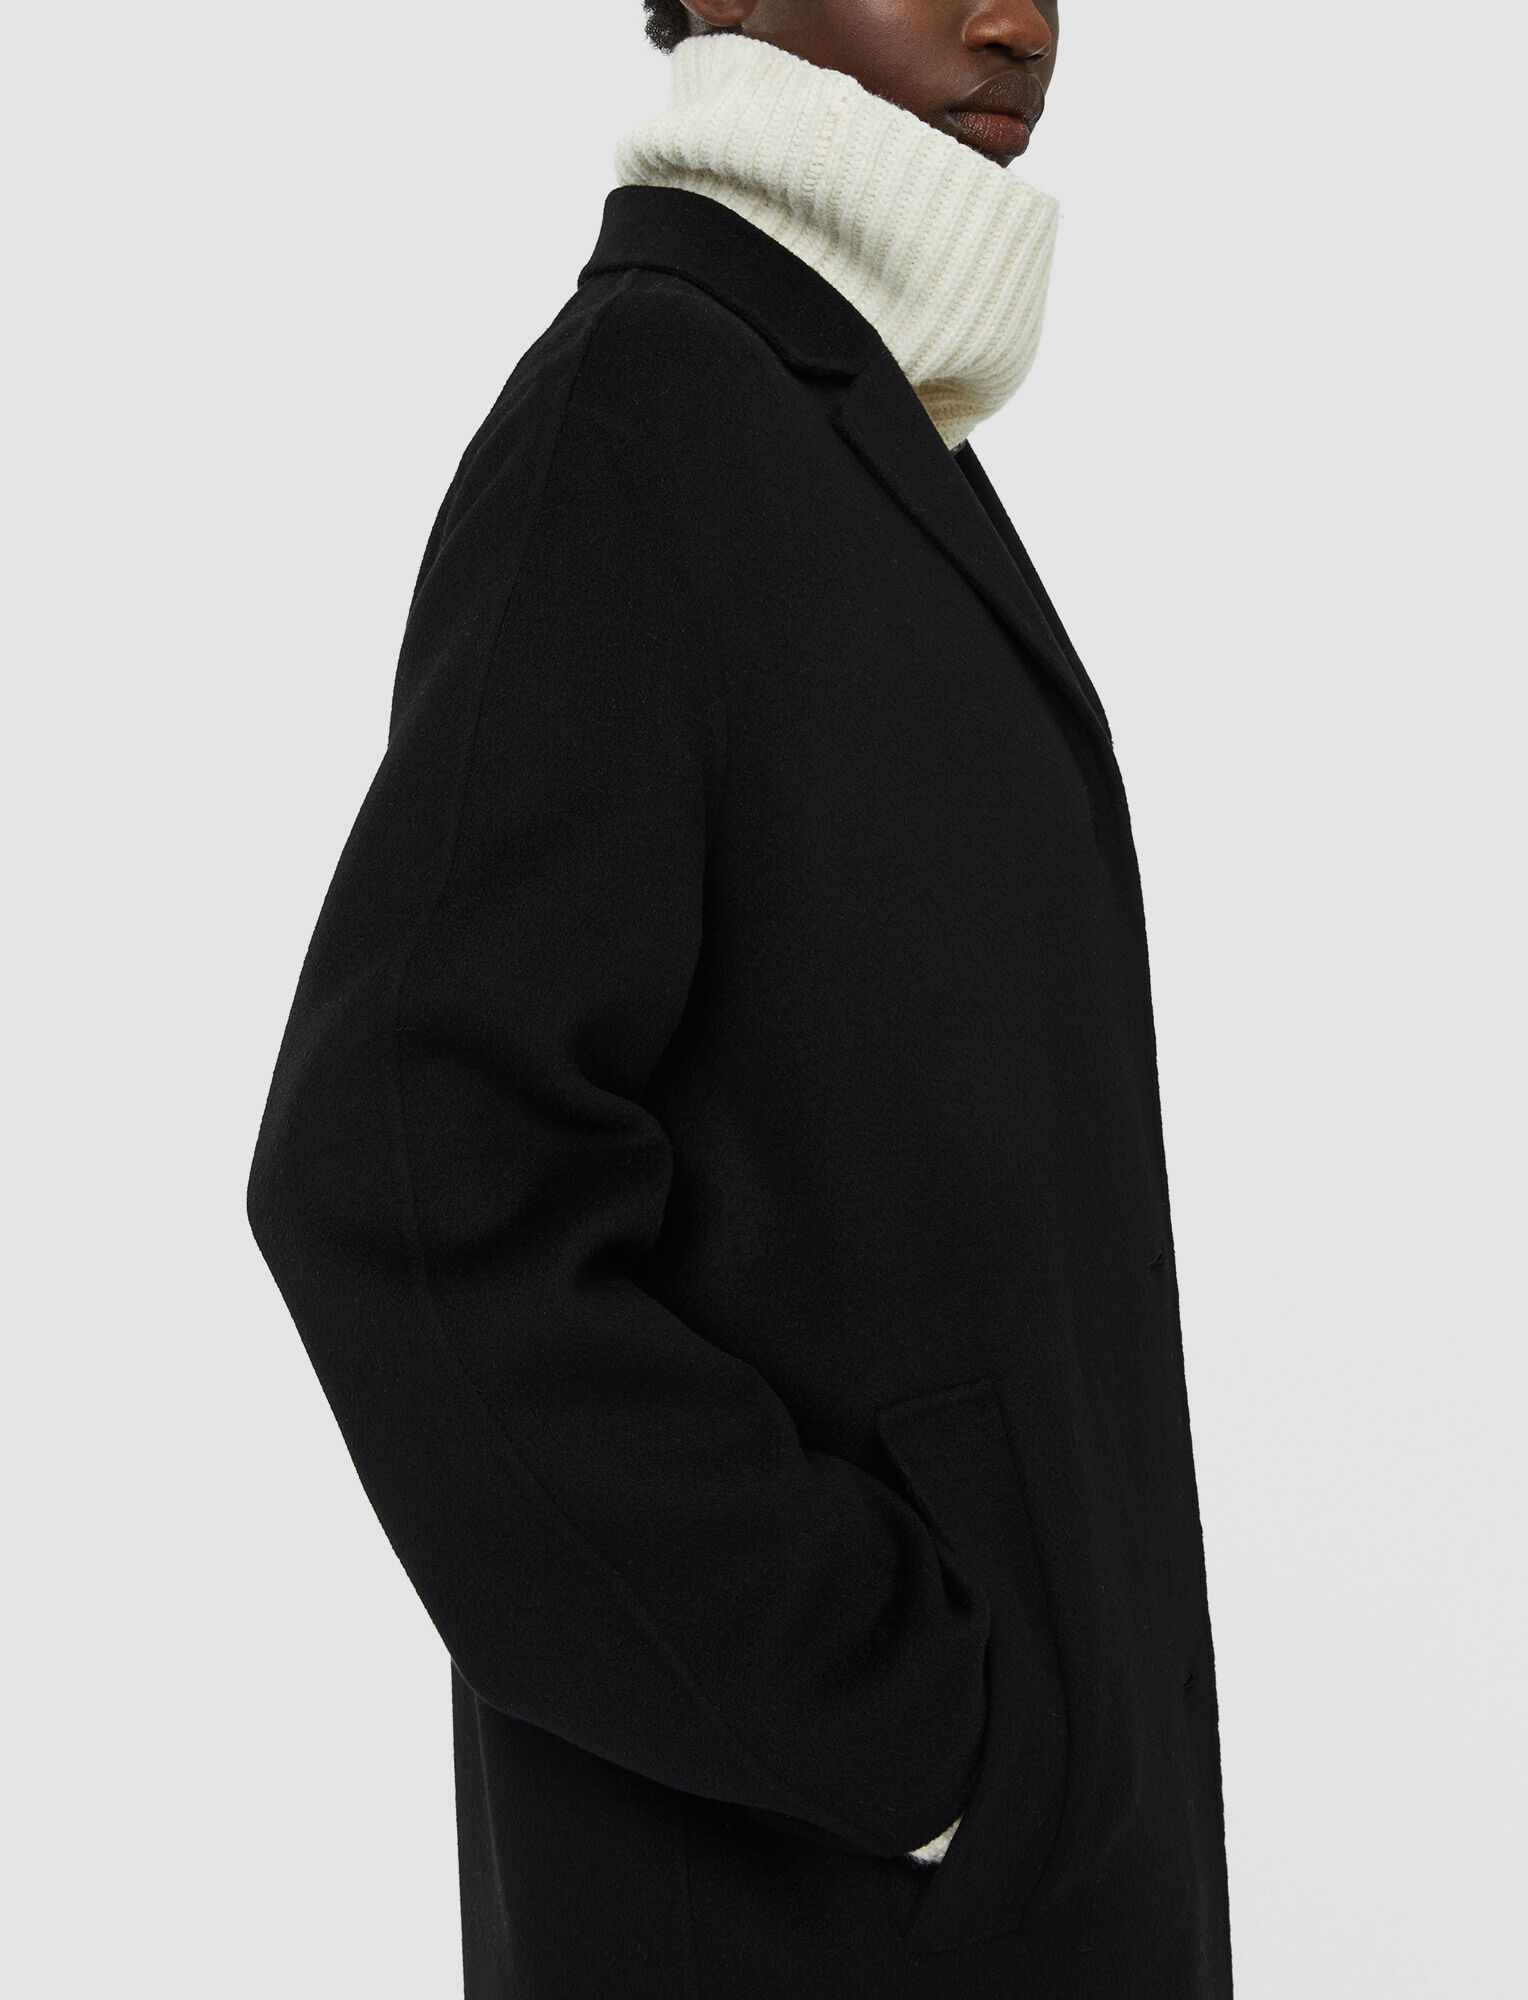 Joseph, Double Face Cashmere Caia Coat, in Black